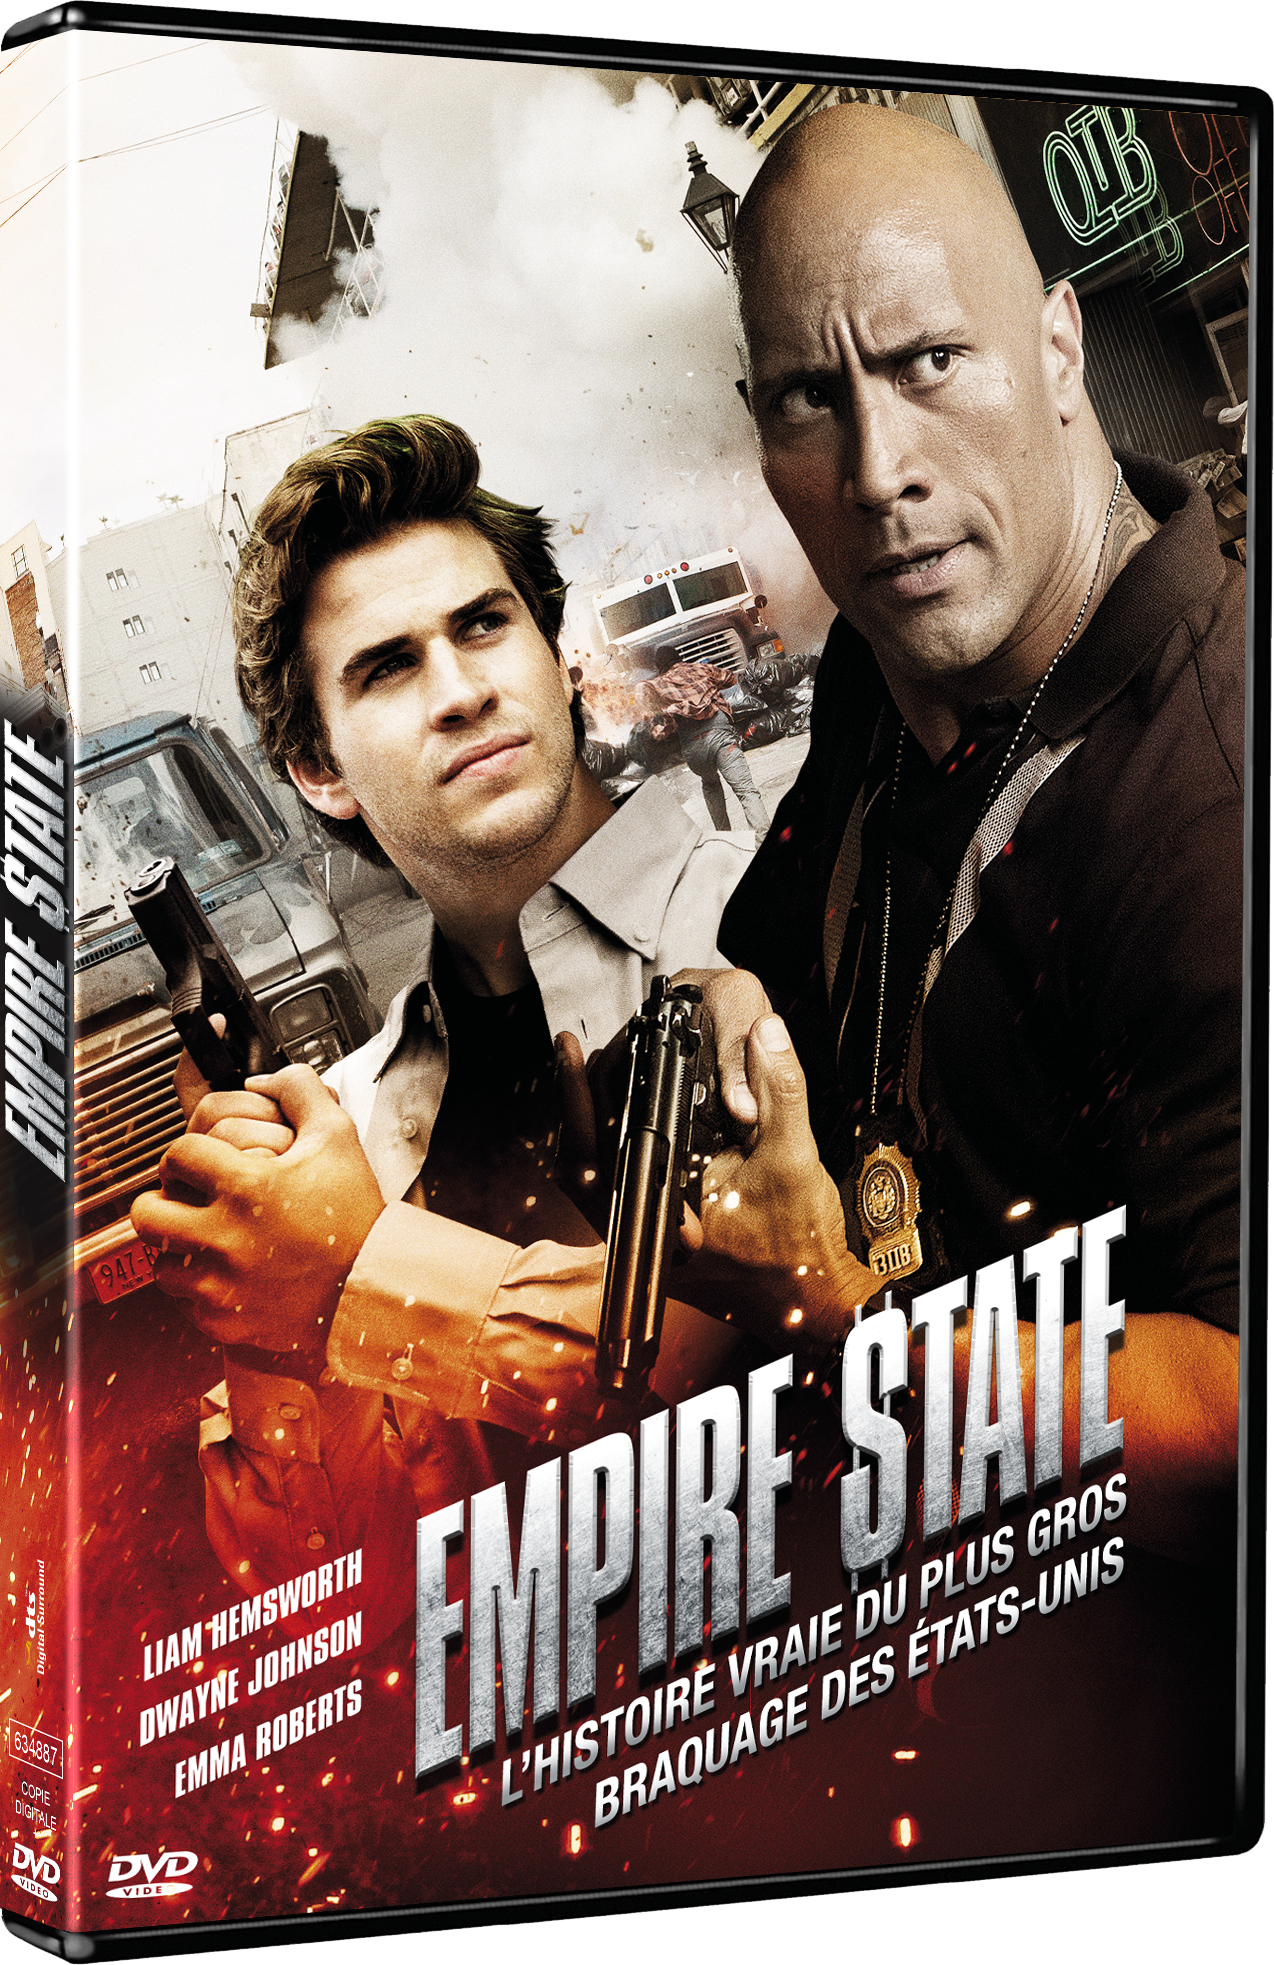 EMPIRE STATE - DVD